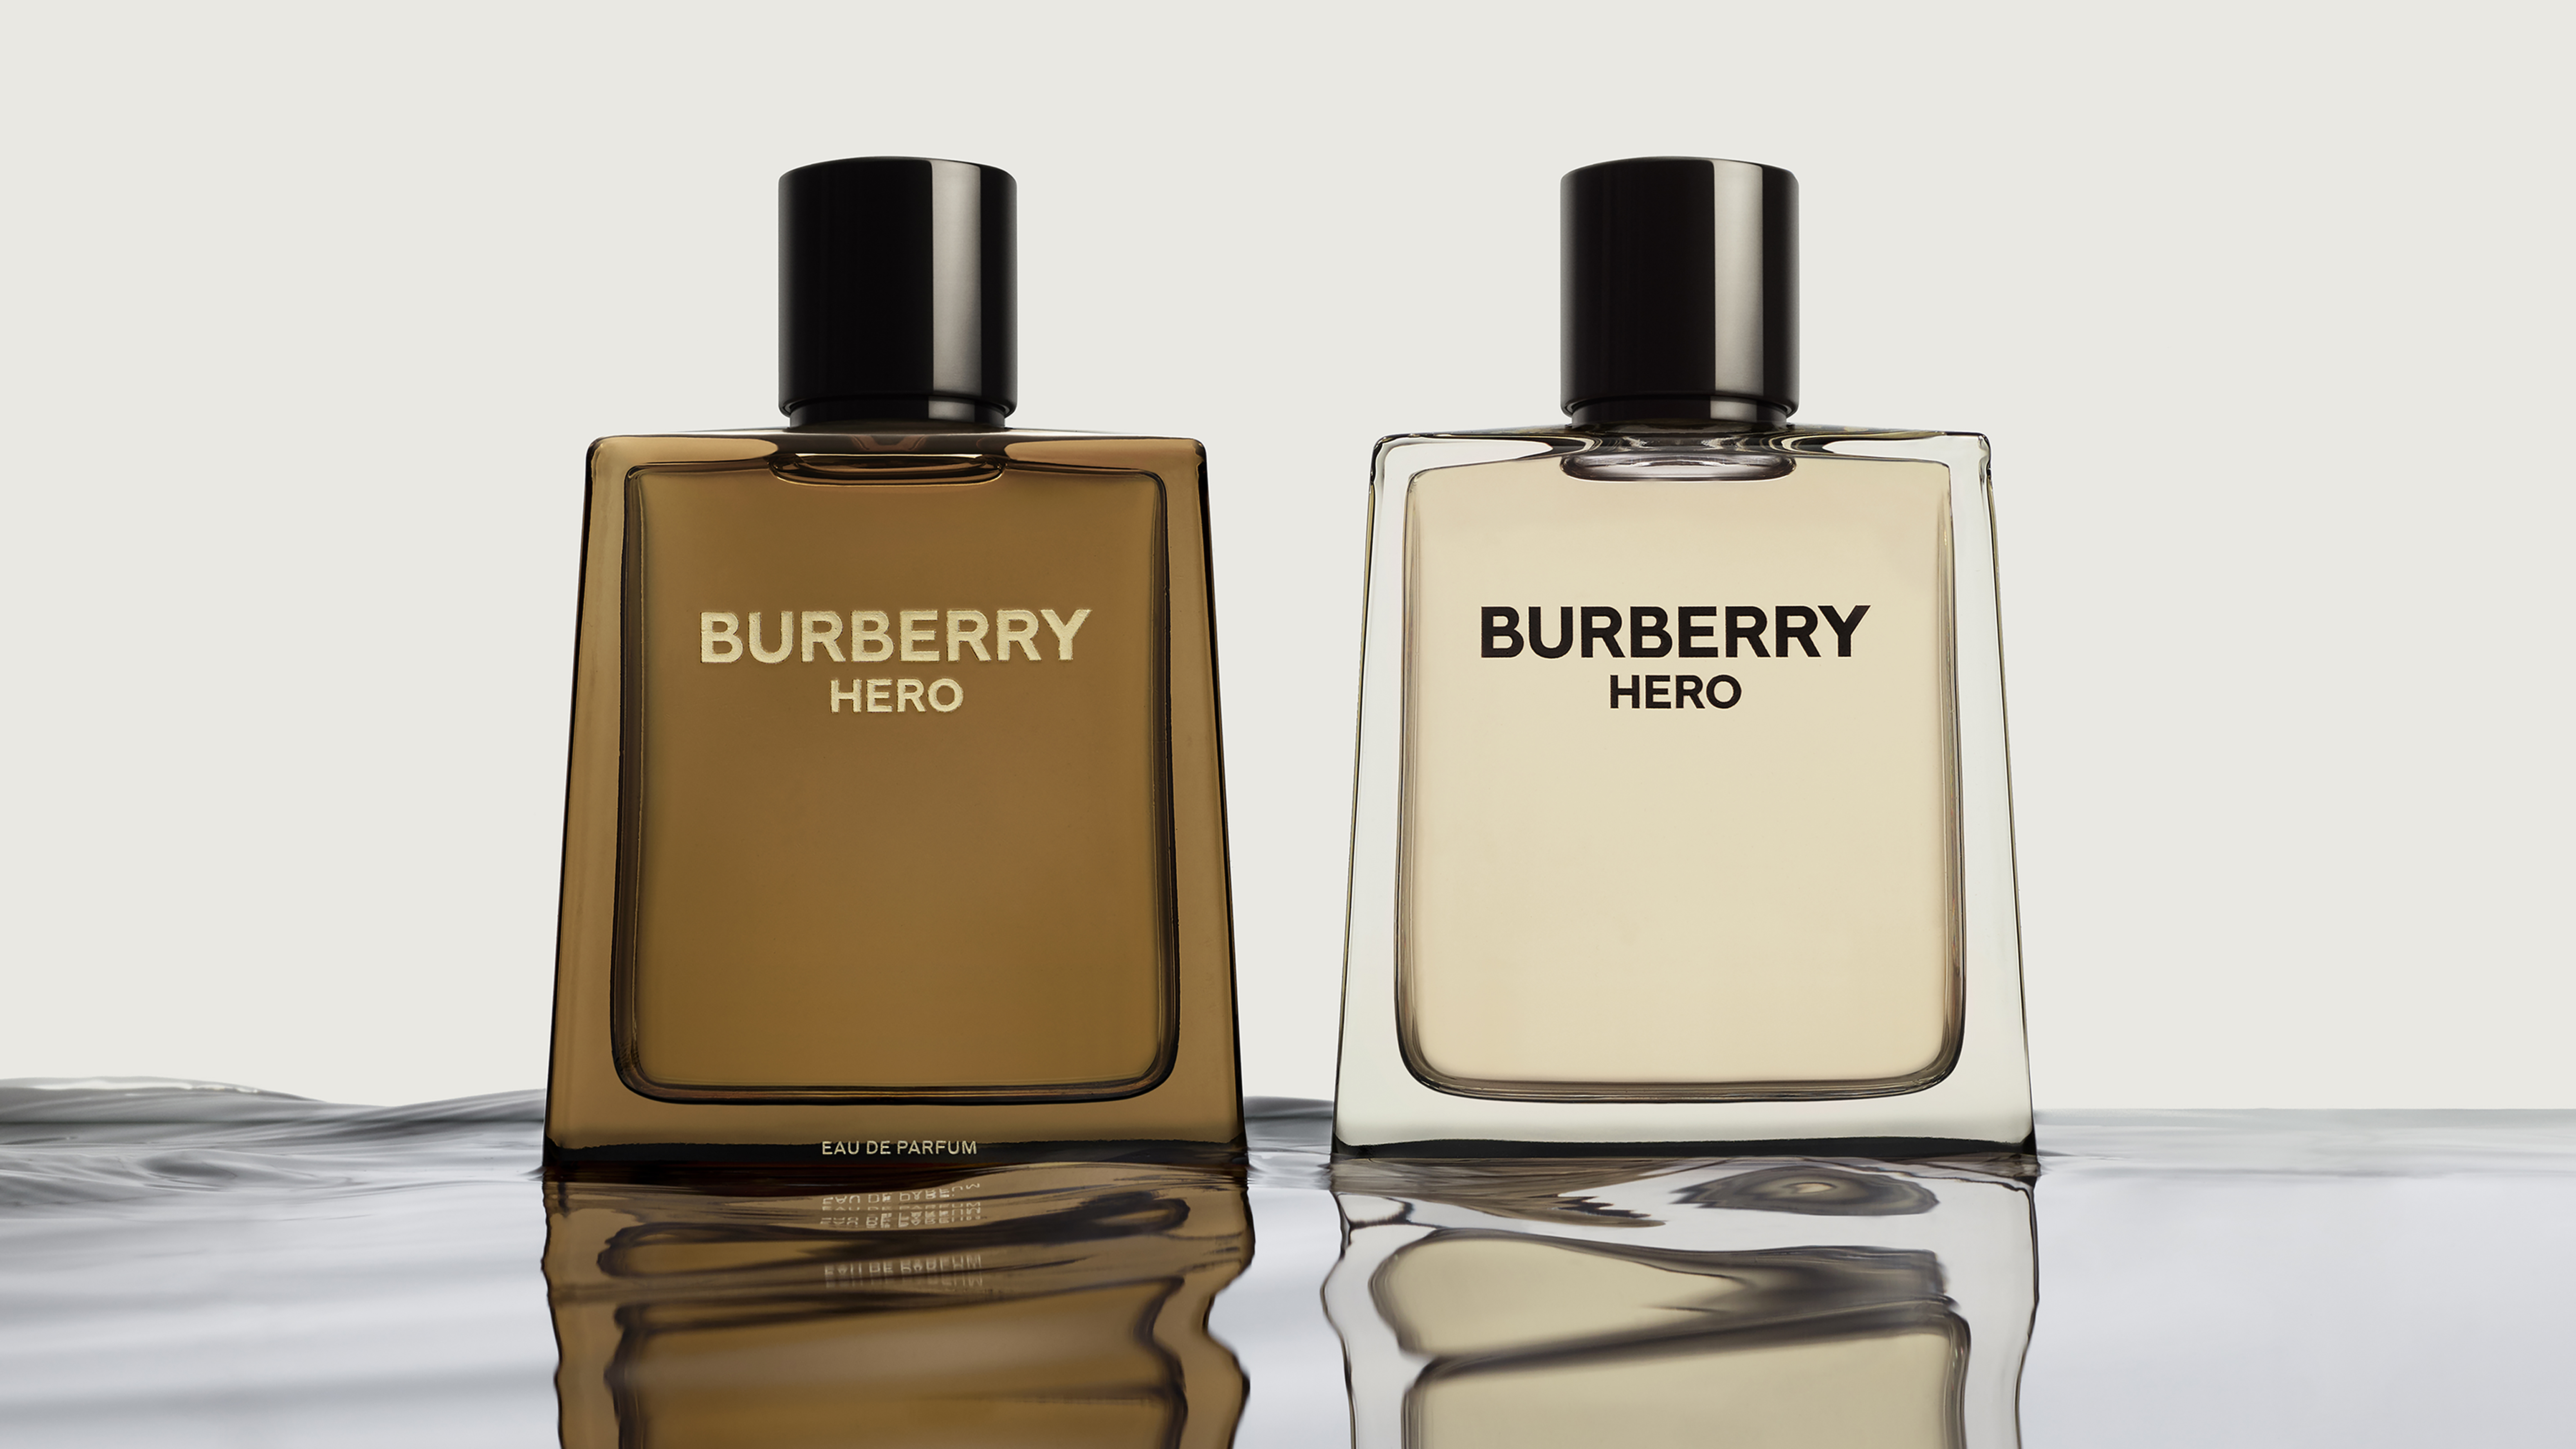 Burberry Hero parfemska i toaletna voda slave novo moderno herojstvo. Moderni heroji su, baš kao i Burberry Hero linija, istovremeno snažni i osećajni, moćni i nežni.